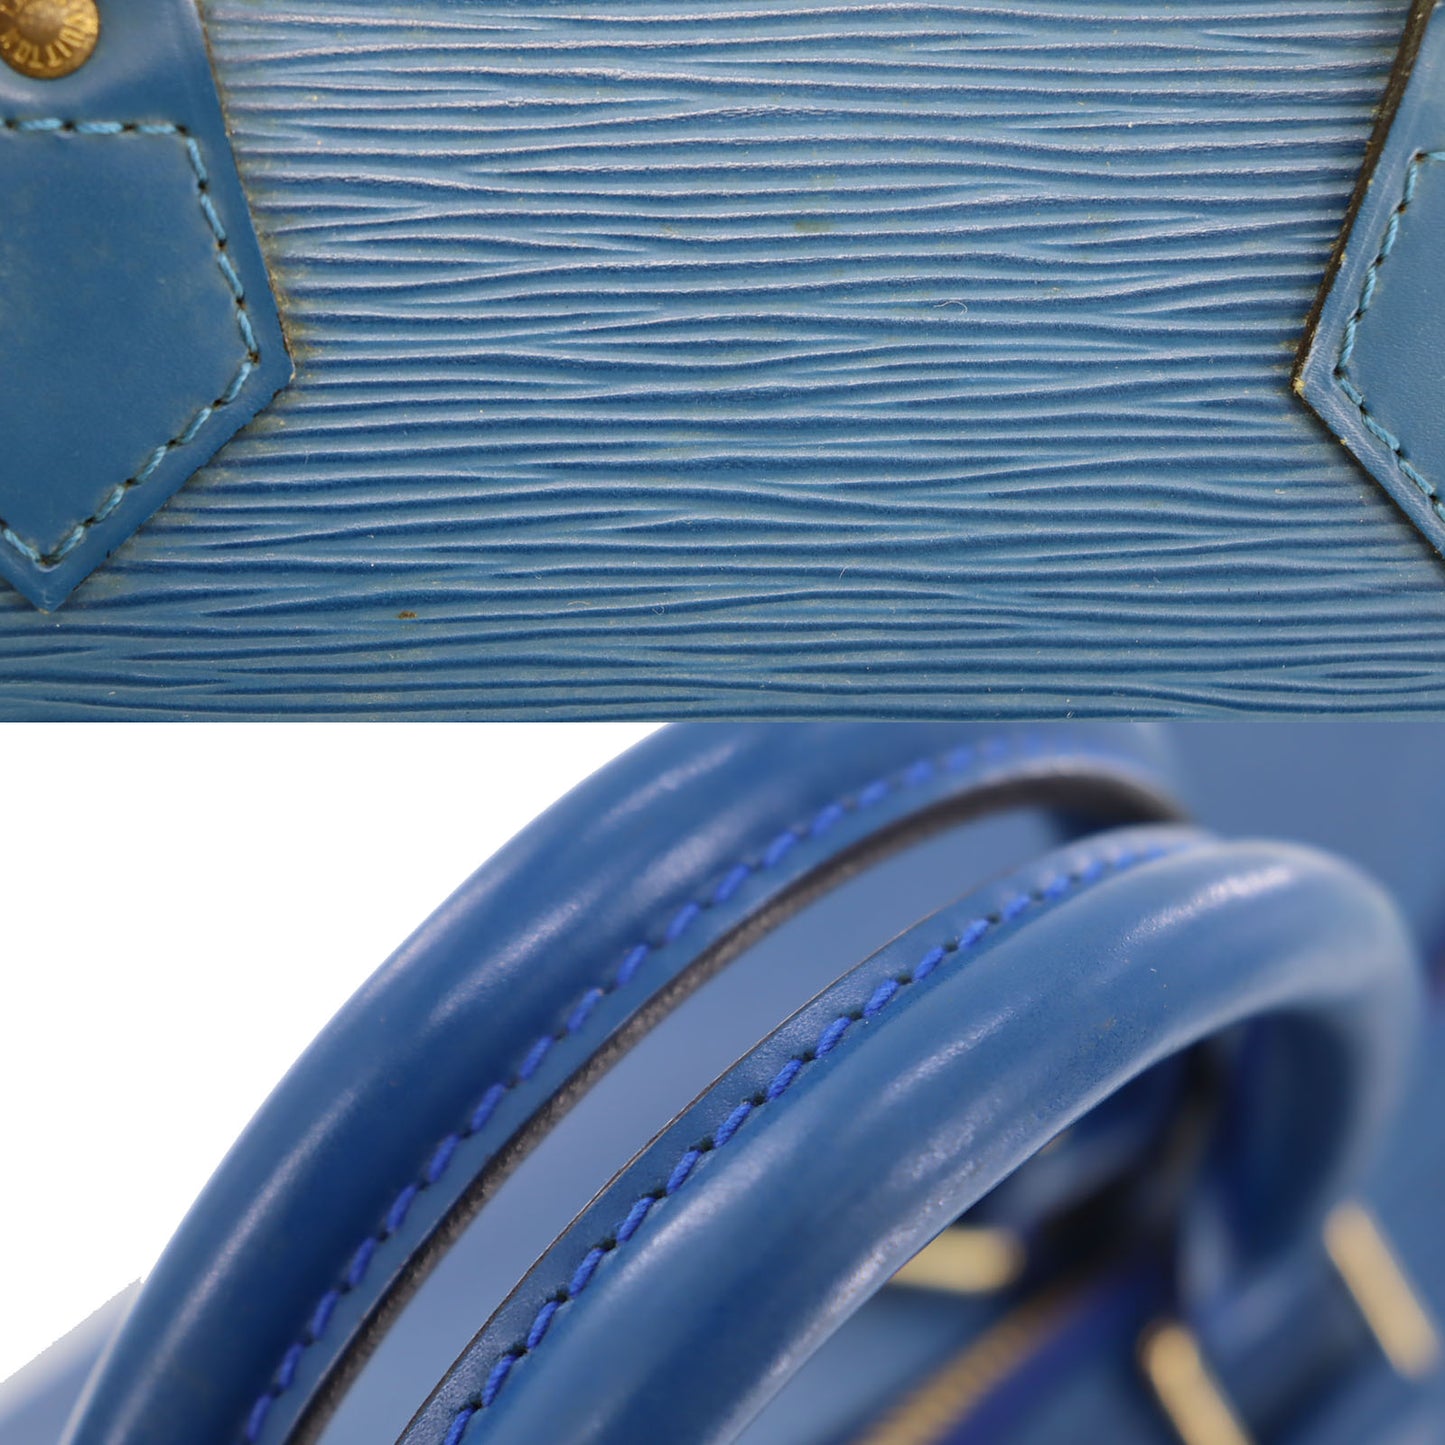 Louis Vuitton LV Speedy 30 HandBag Epi Leather Blue M43005  #BY107